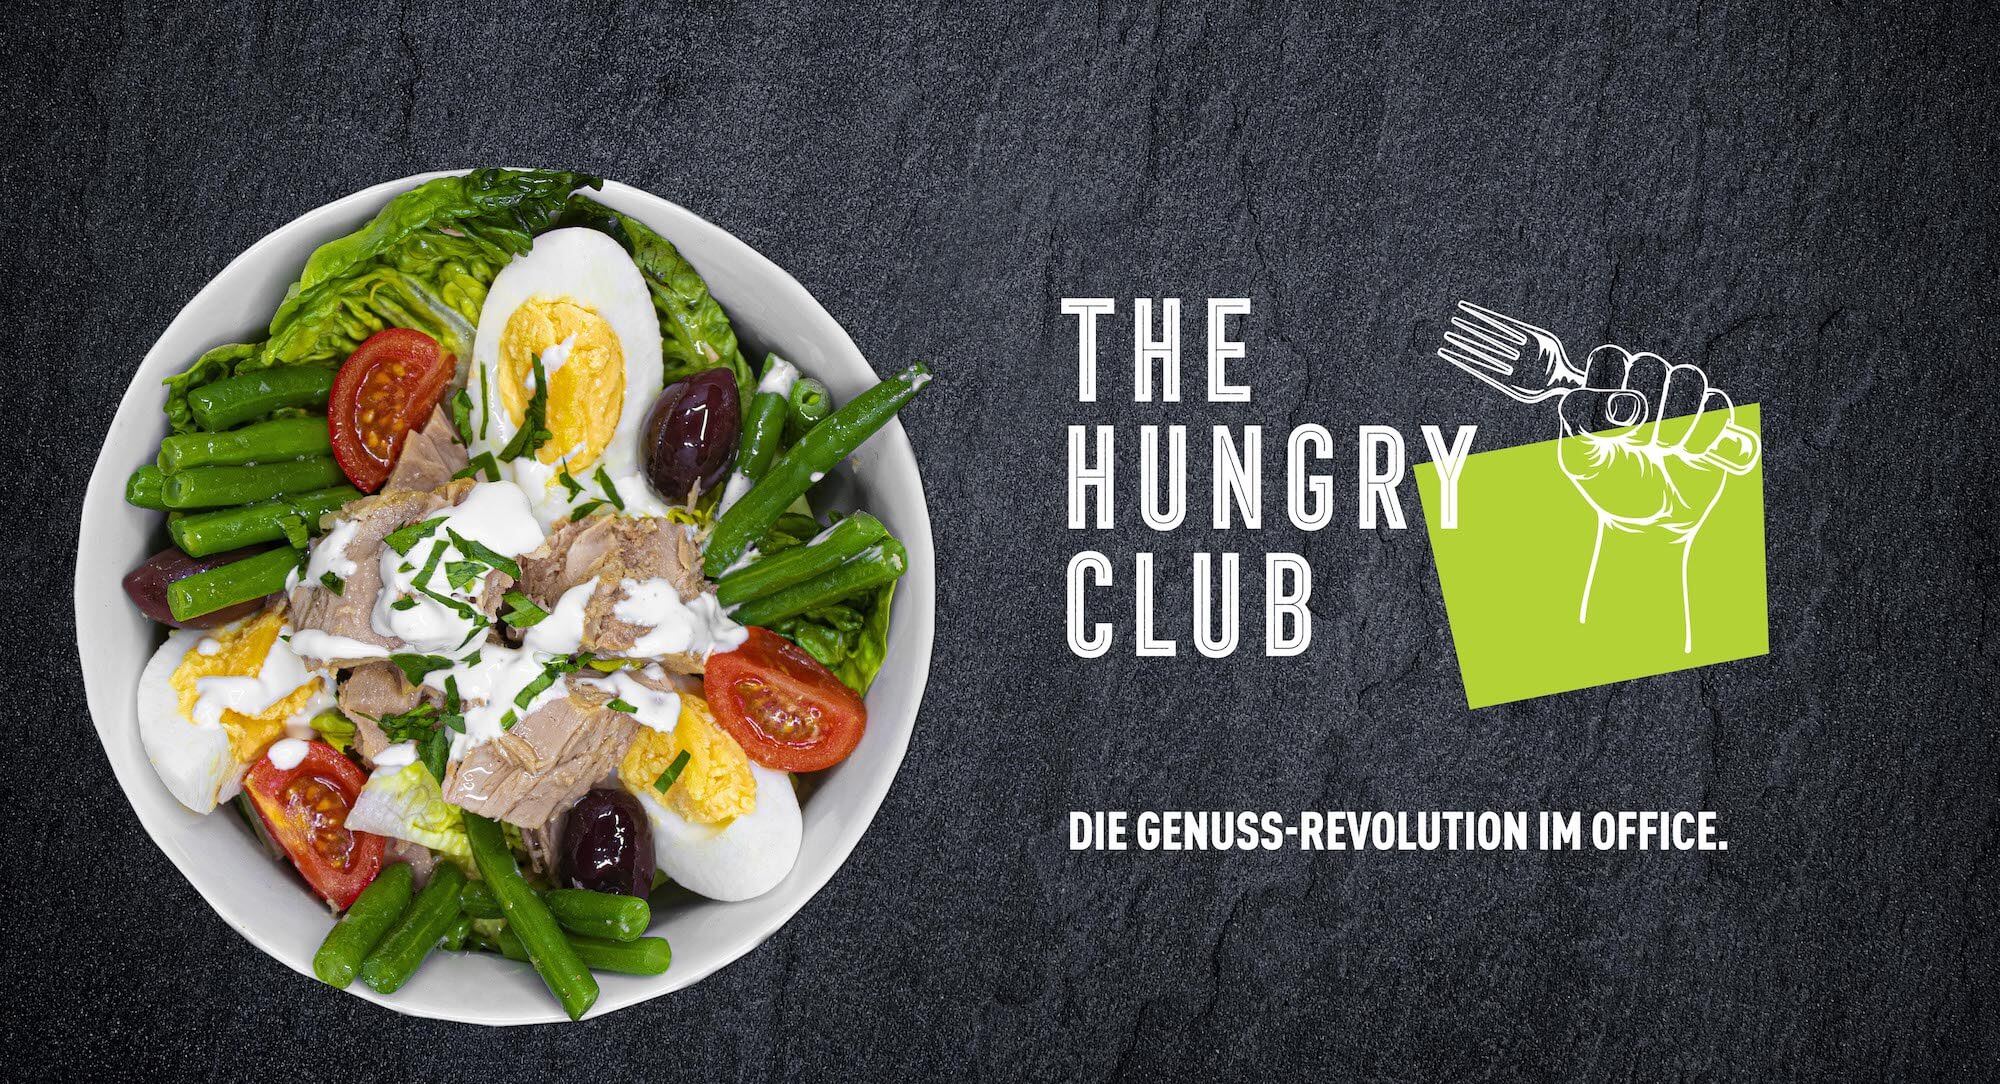 The hungry club - Die Genuss-Revolution im Office